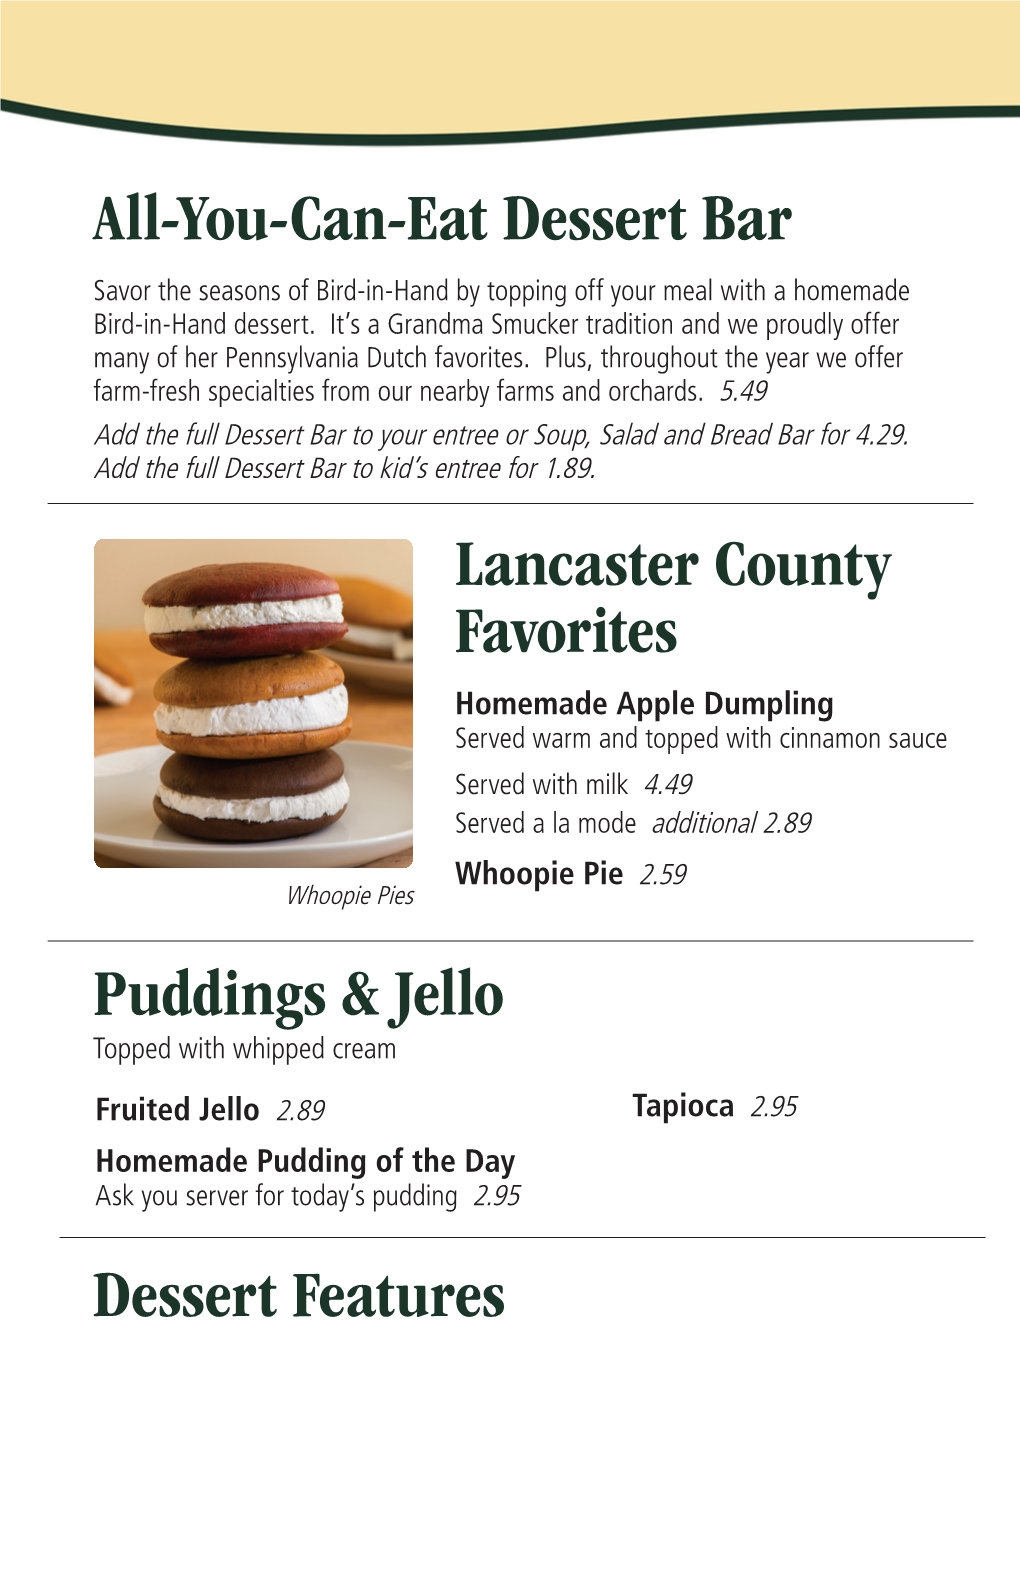 All-You-Can-Eat Dessert Bar Lancaster County Favorites Dessert